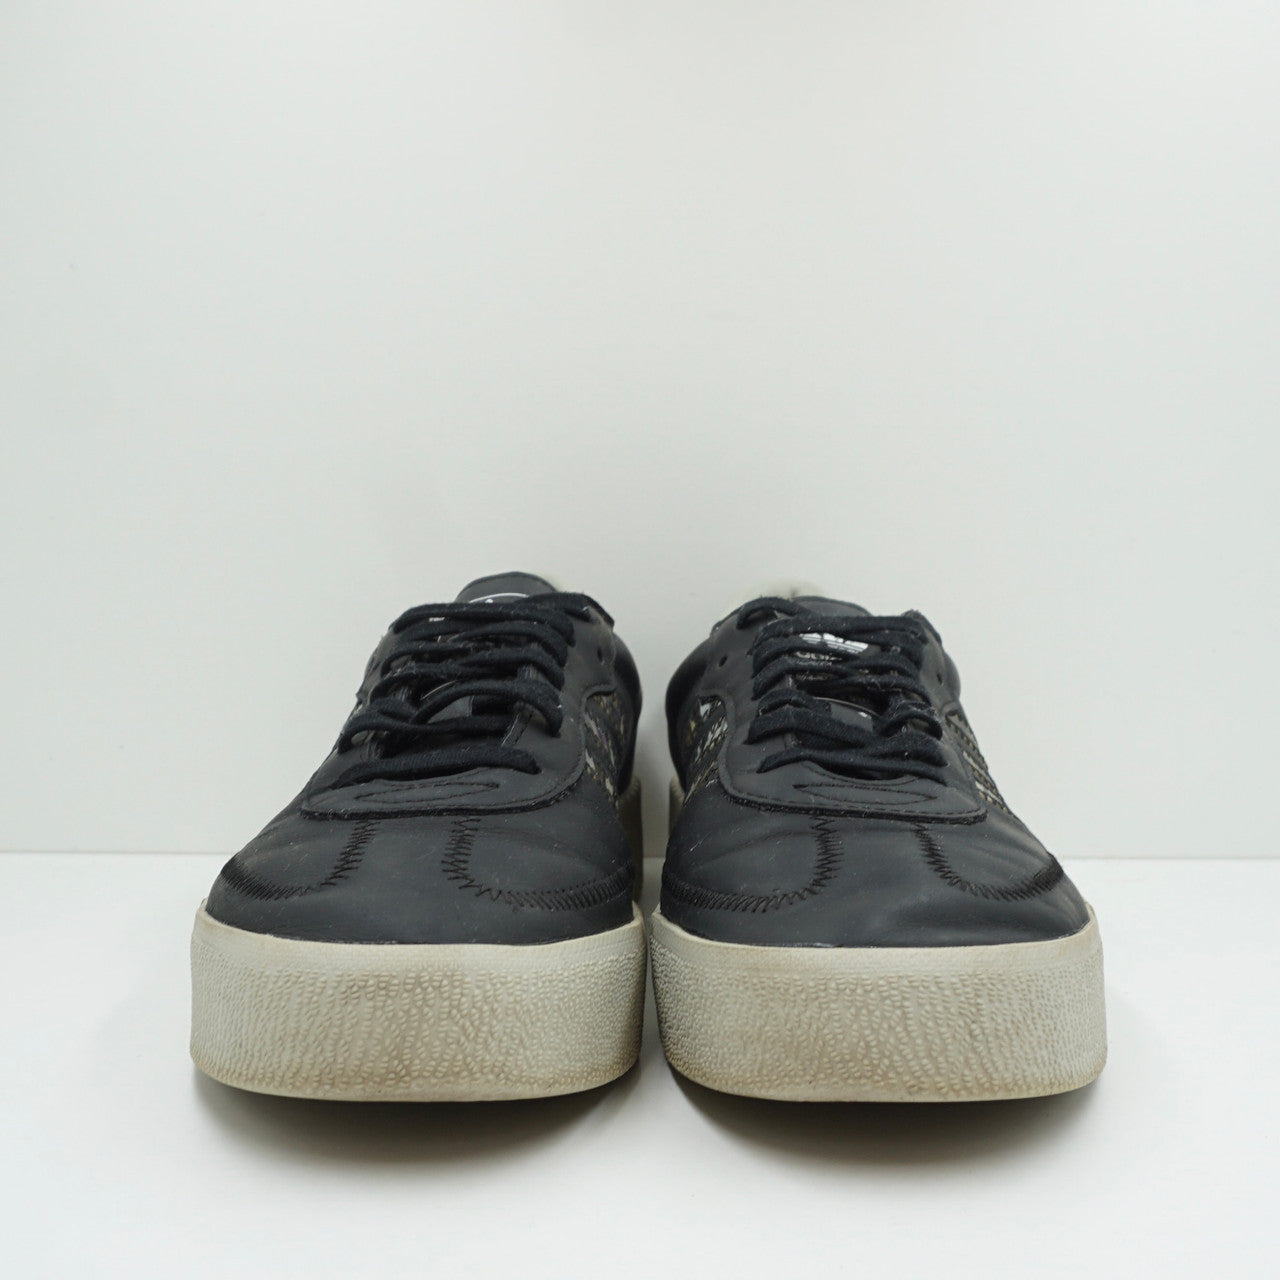 Adidas Sambarose Black Grey (W)